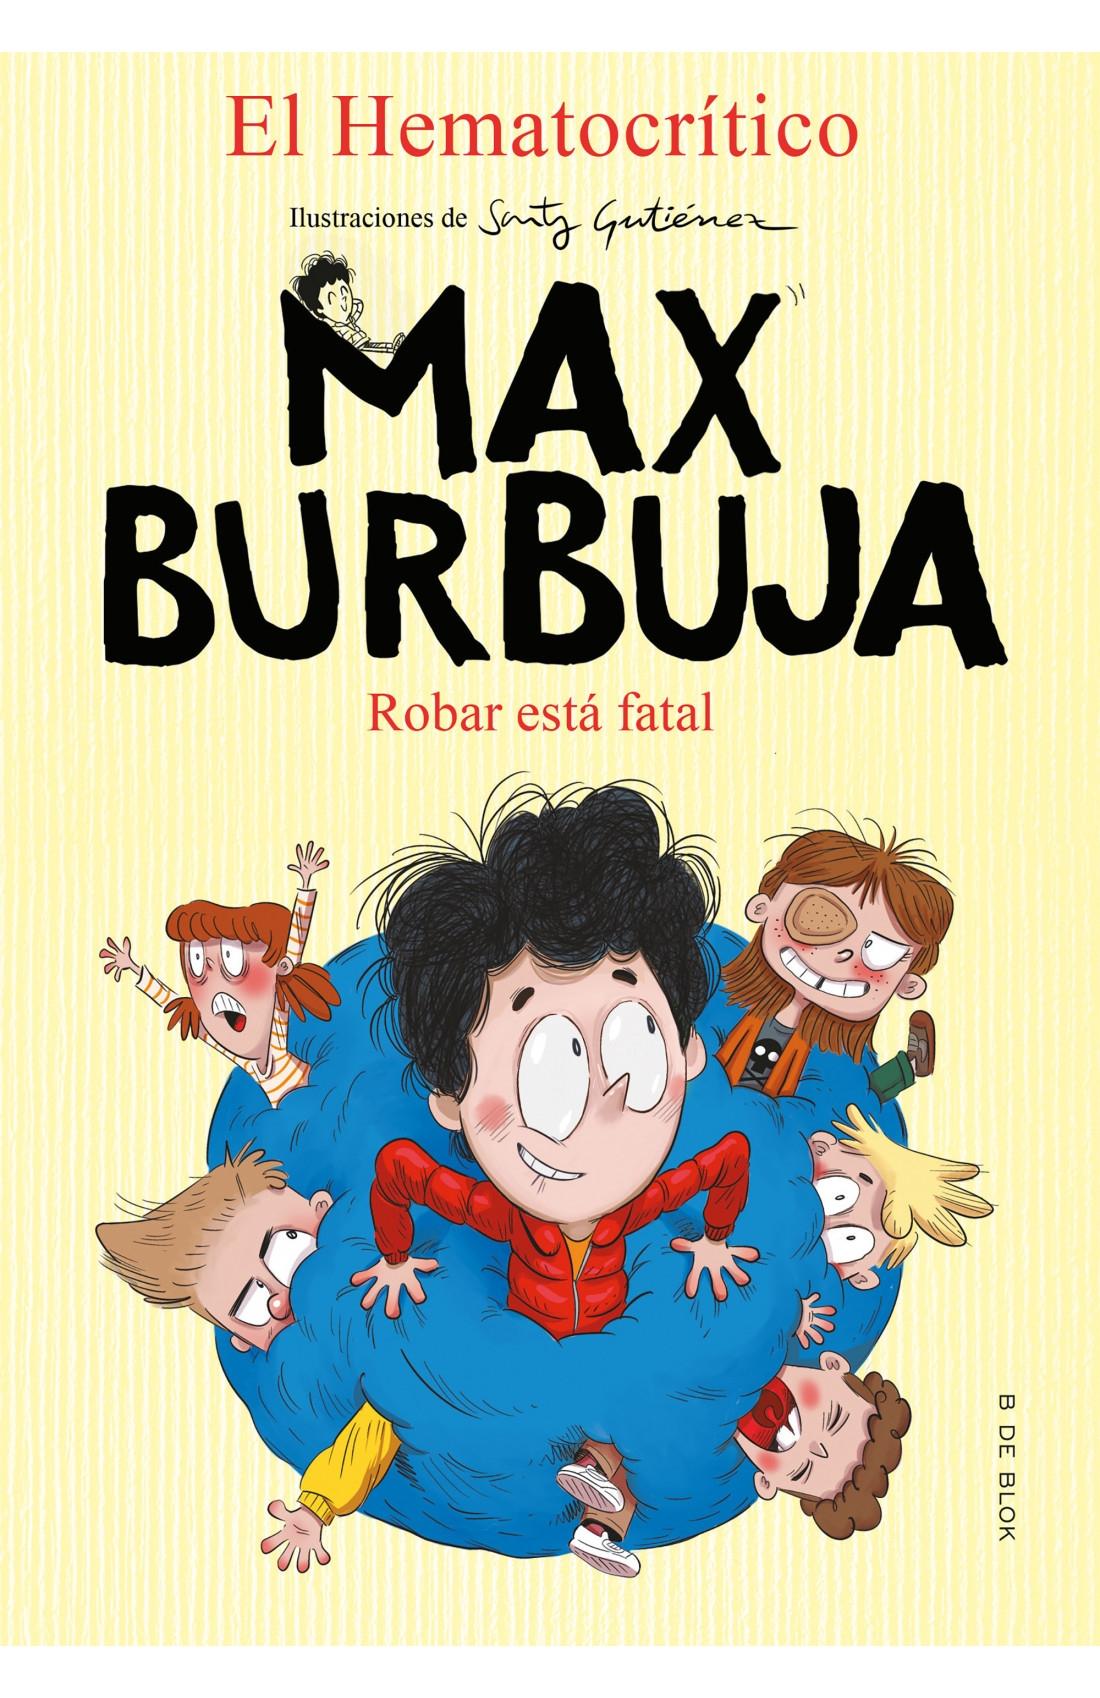 Max Burbuja 2 "Robar está fatal"